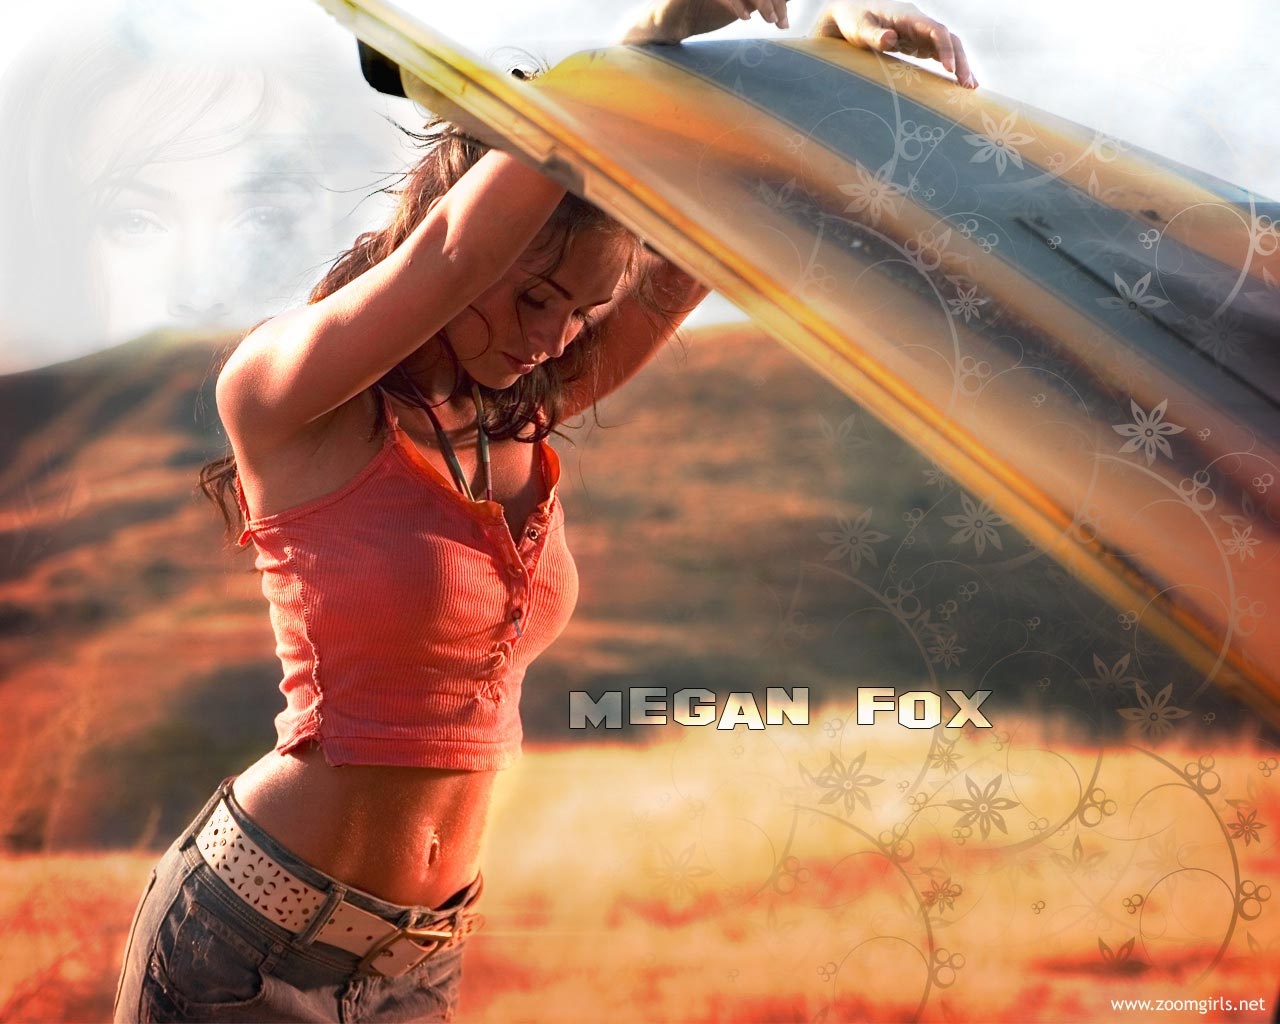 Fox nude megan transformers Megan Fox